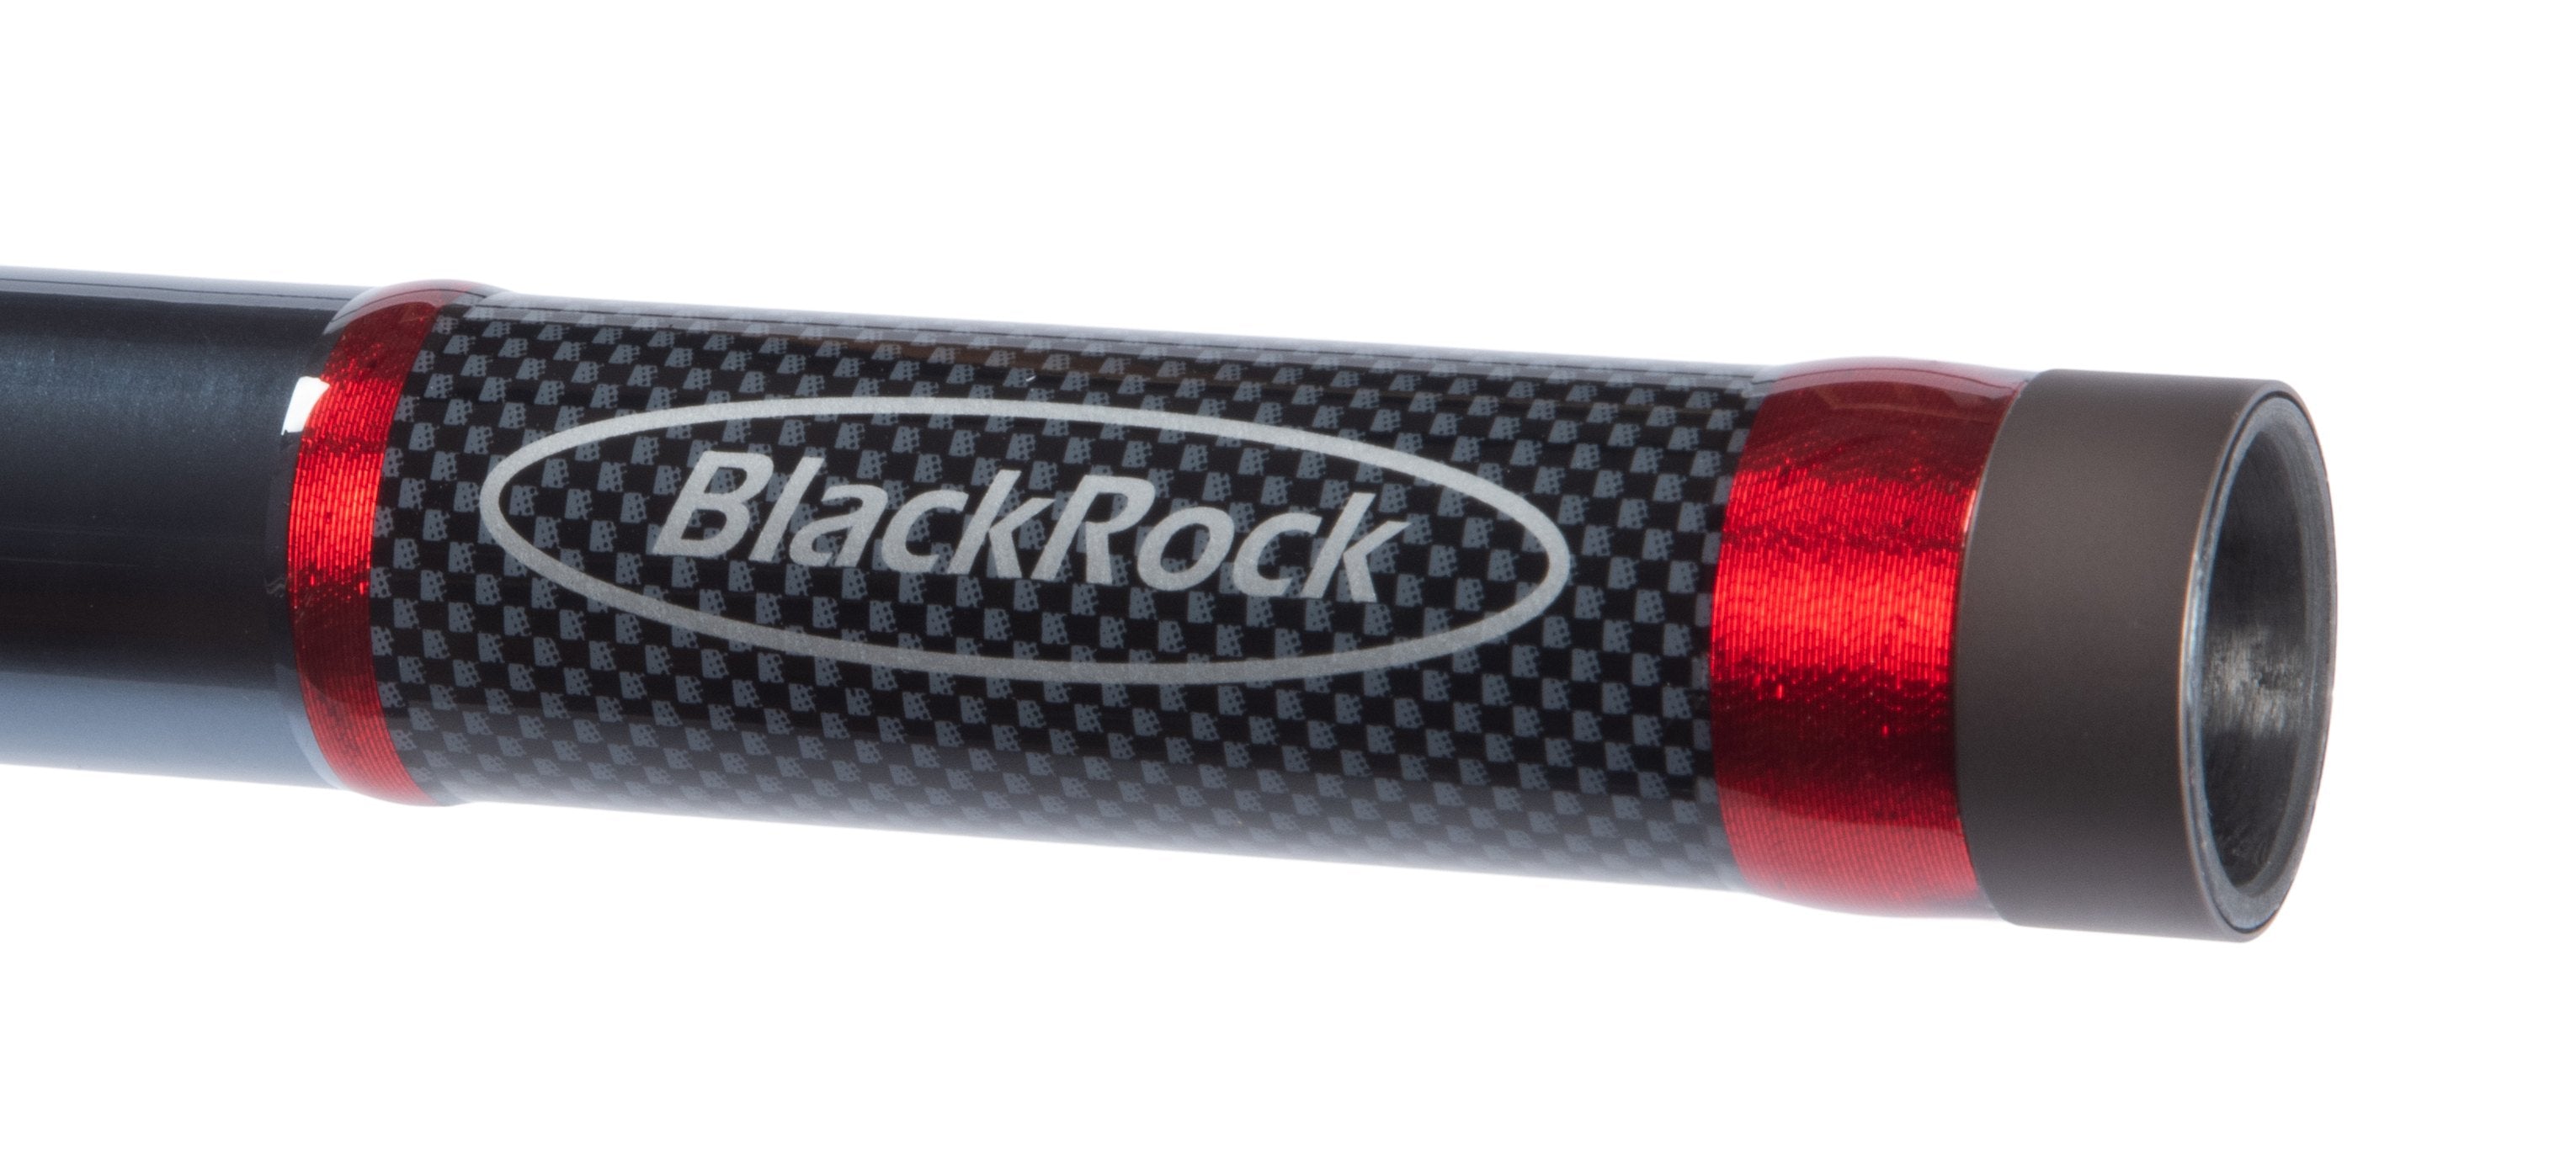 Blackrock Rock and Roll 4300 100-300g 2G Heavy Surf Fishing Rod